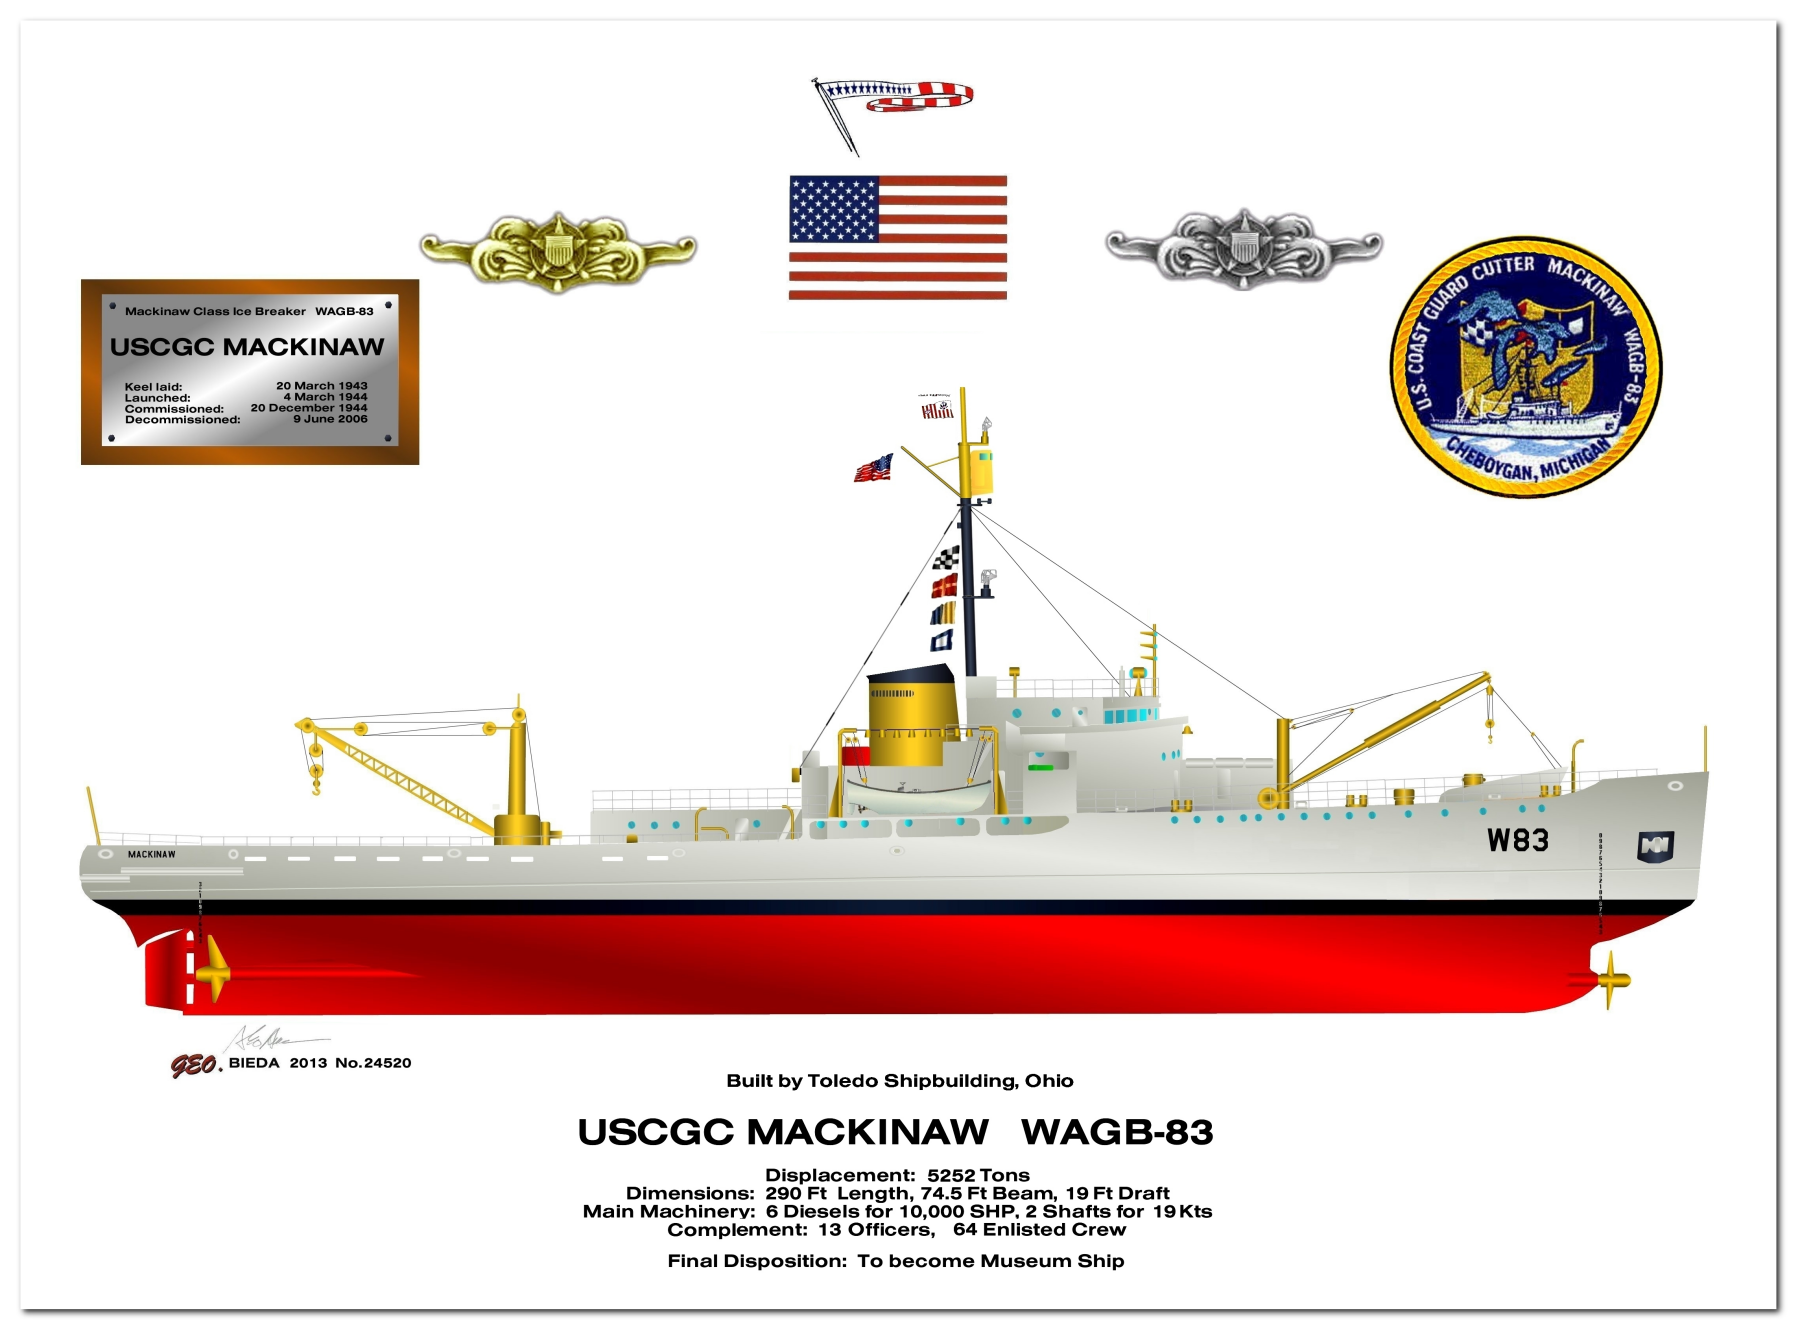 USCGC Mackinaw WAGB 83, a Great Lakes Icebreaker